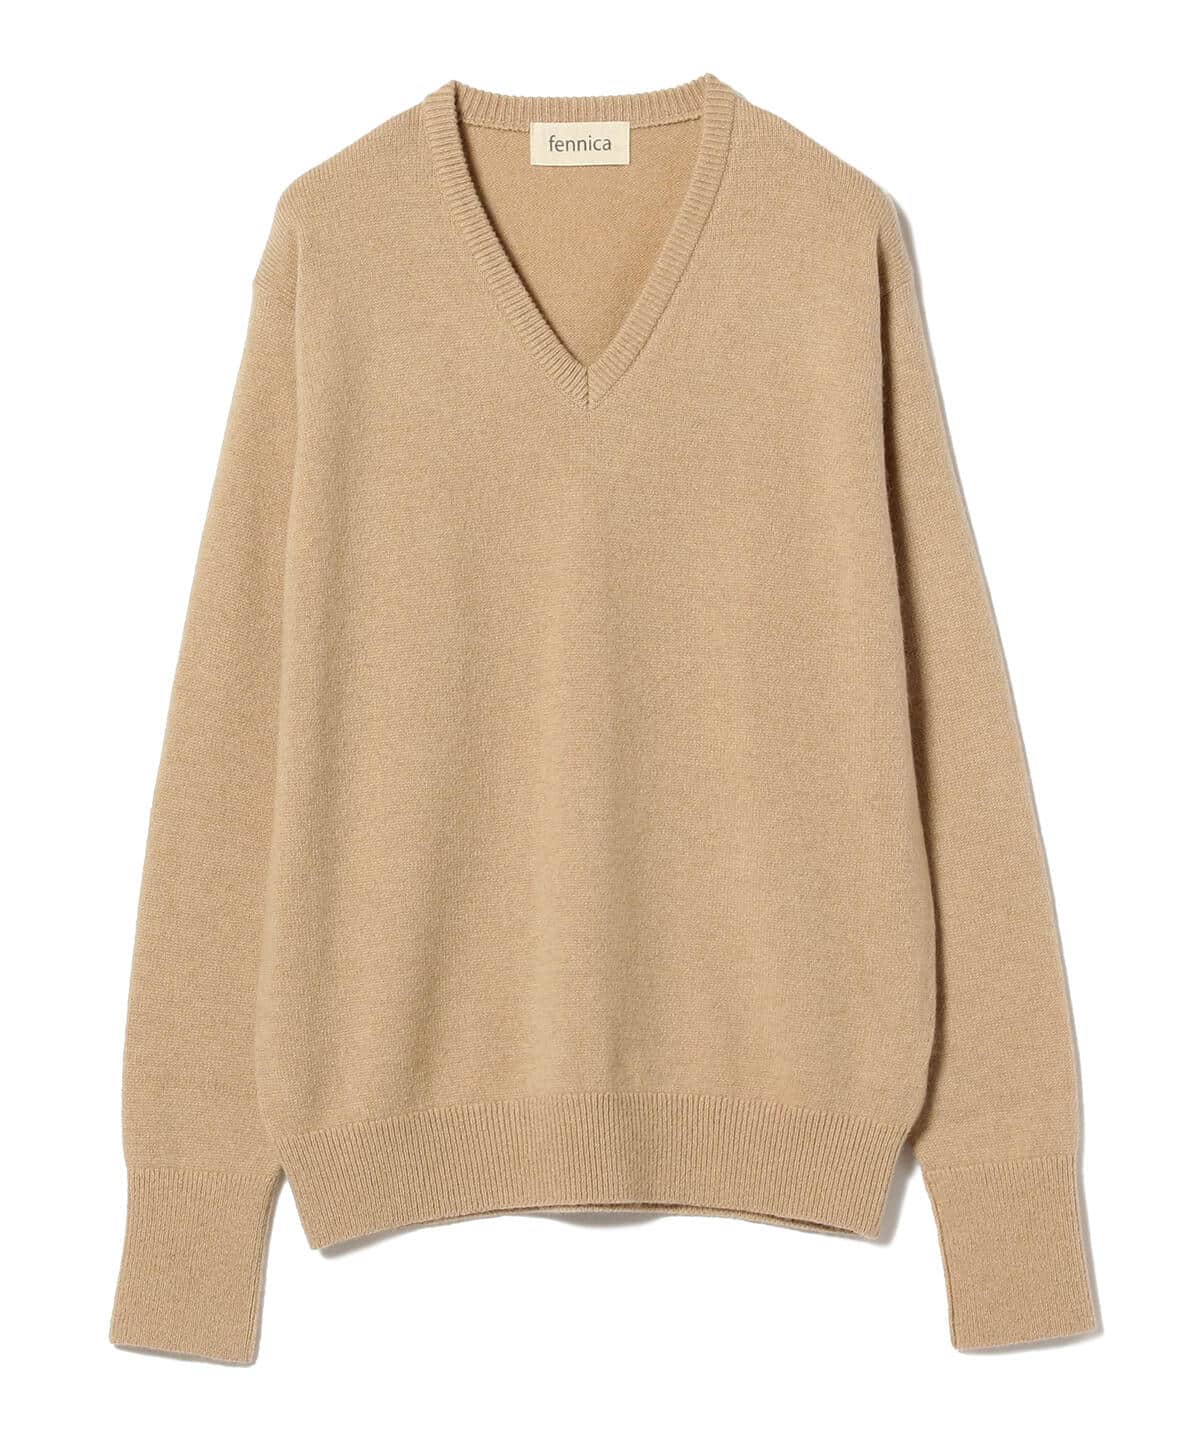 fennica / Camel Hair Sweater キャメルヘアセーター-